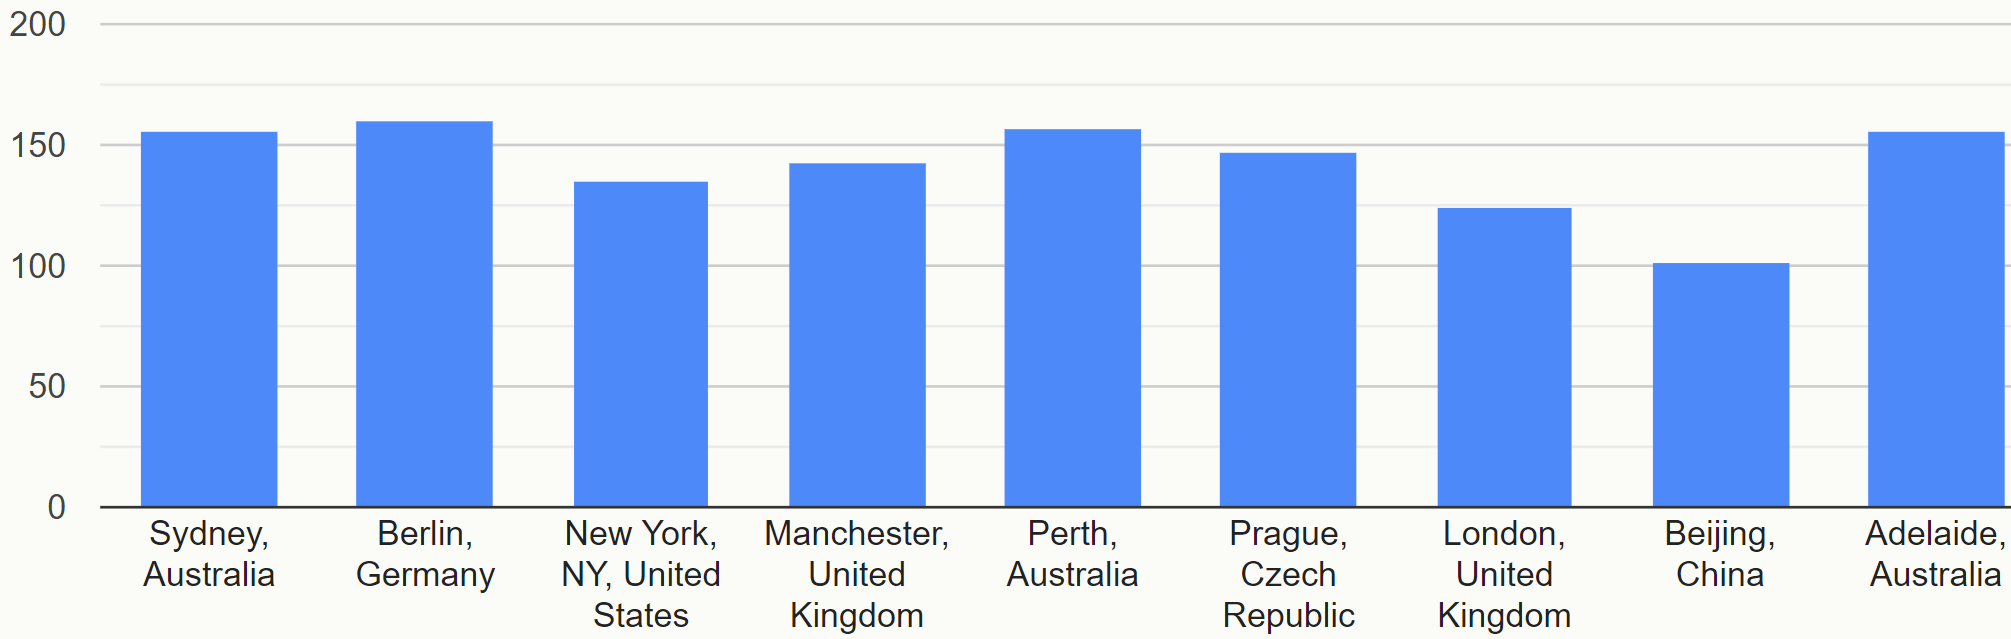 Quality Life Perth city comparisons.